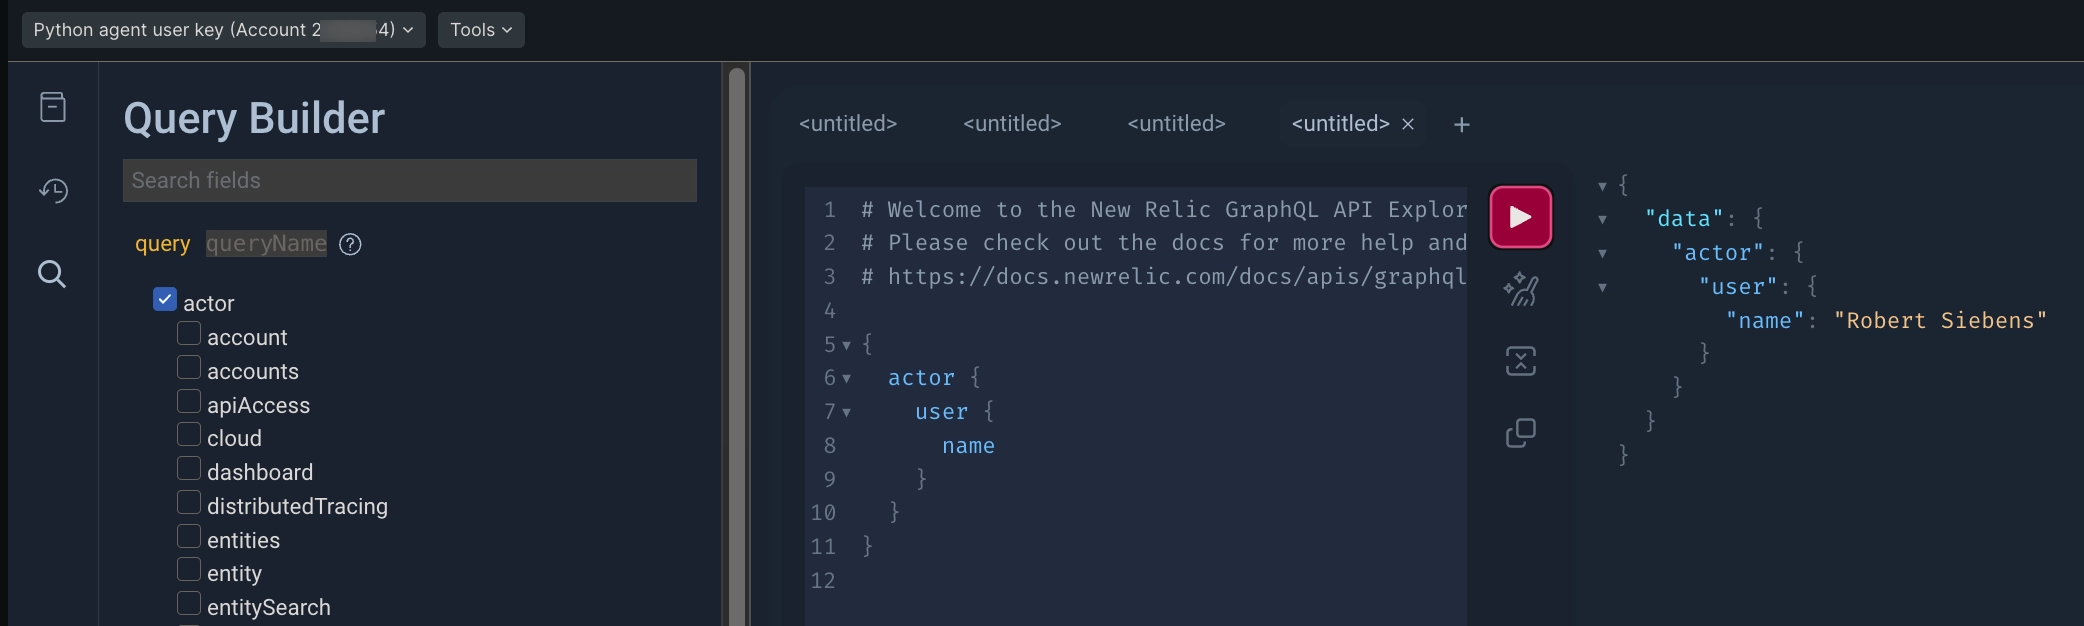 A screenshot of the Nerdgraph API